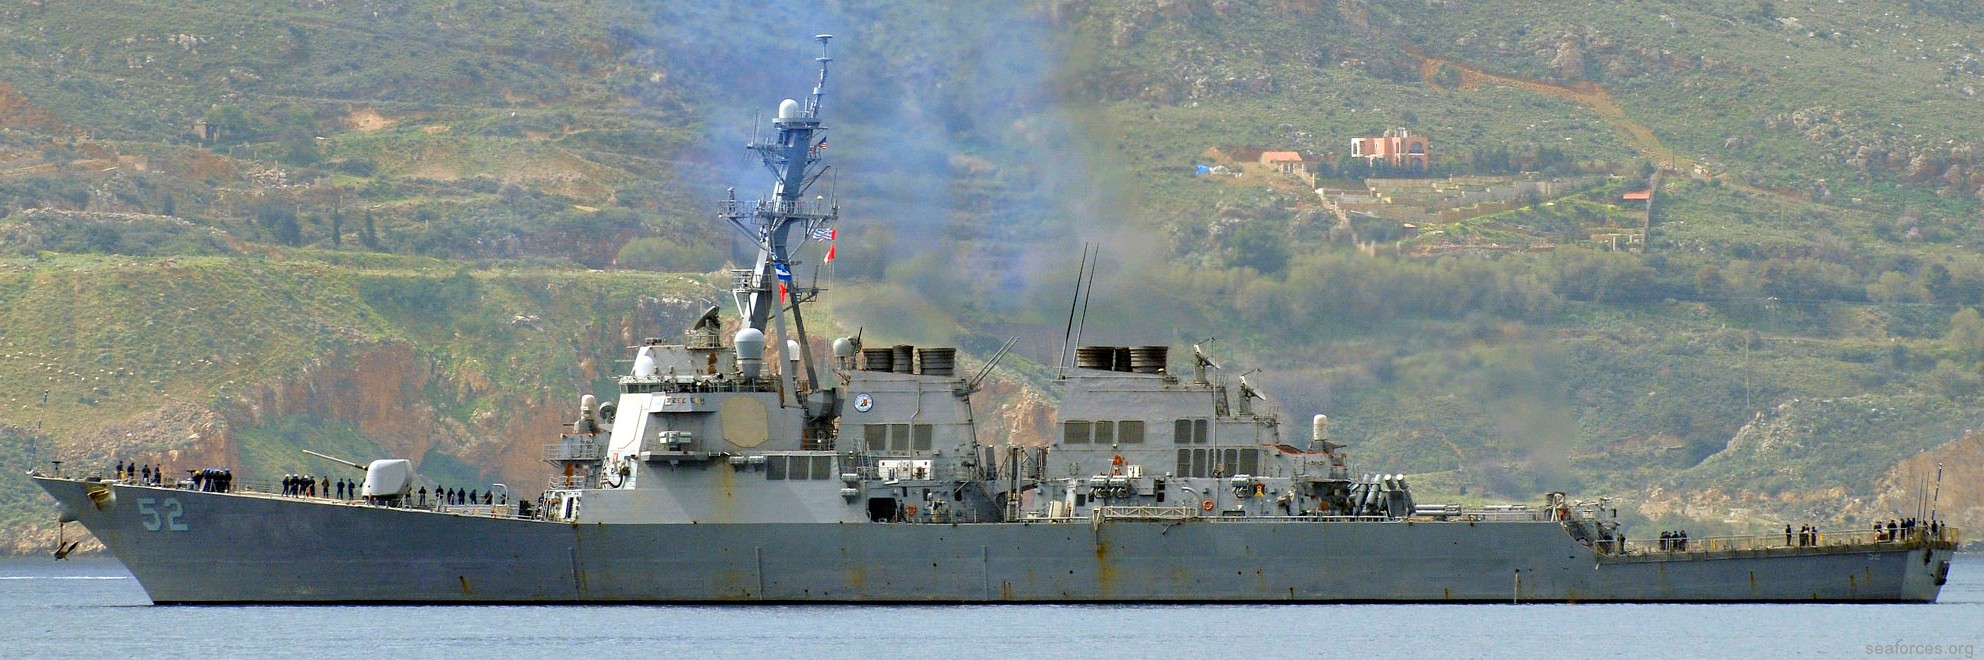 ddg-52 uss barry guided missile destroyer us navy 47